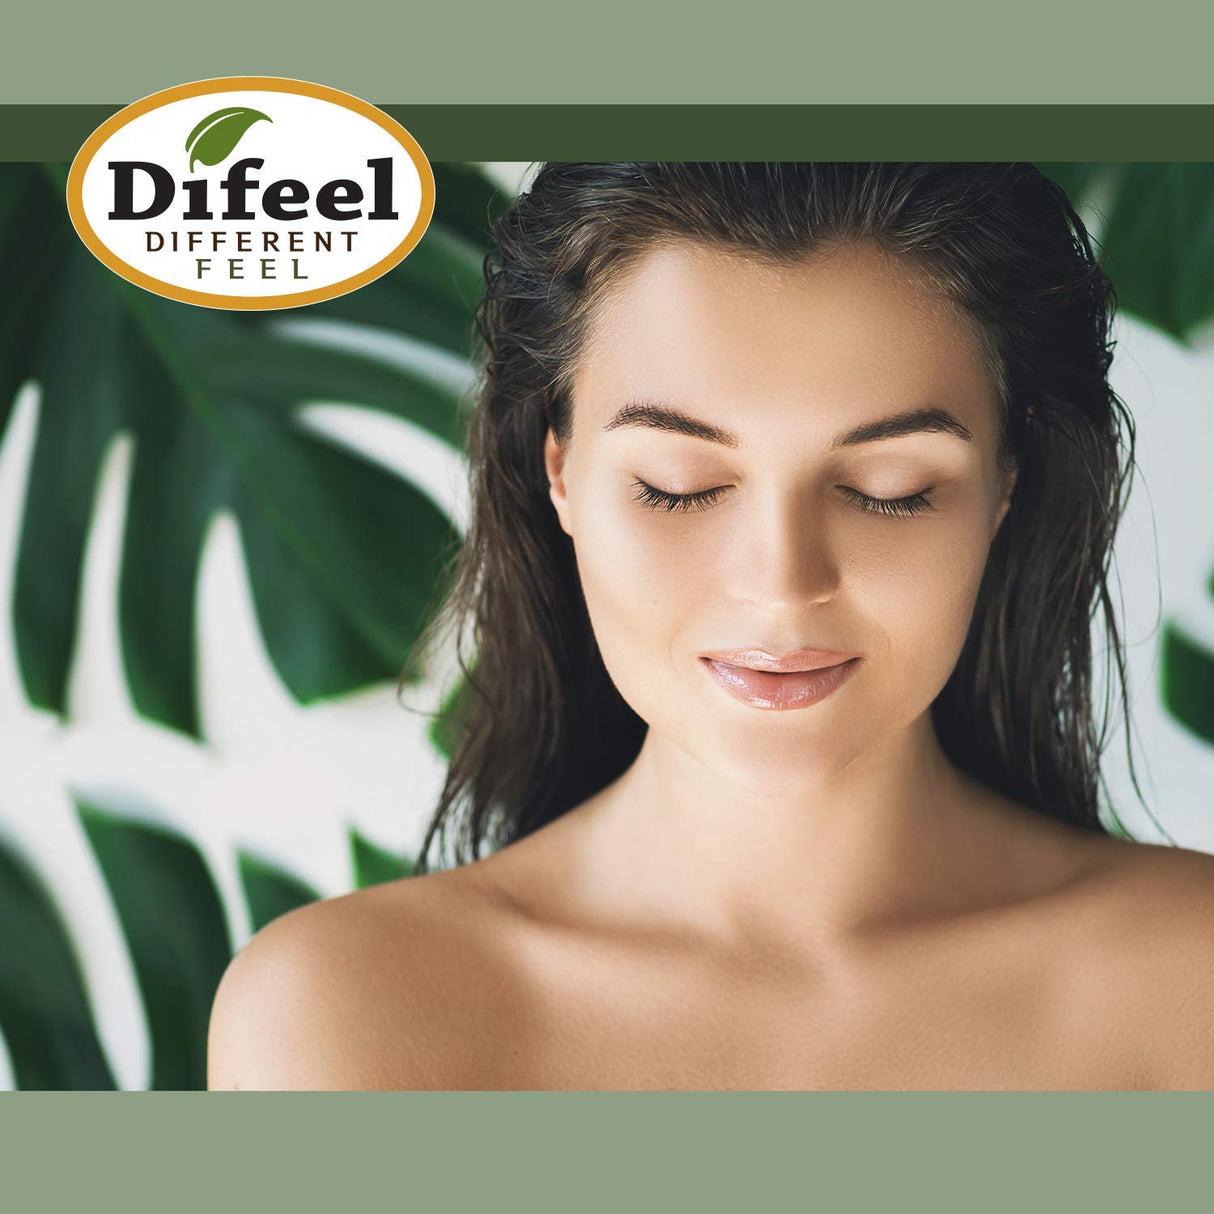 Difeel Pro-Growth Biotin Shampoo 12 oz. Find Your New Look Today!